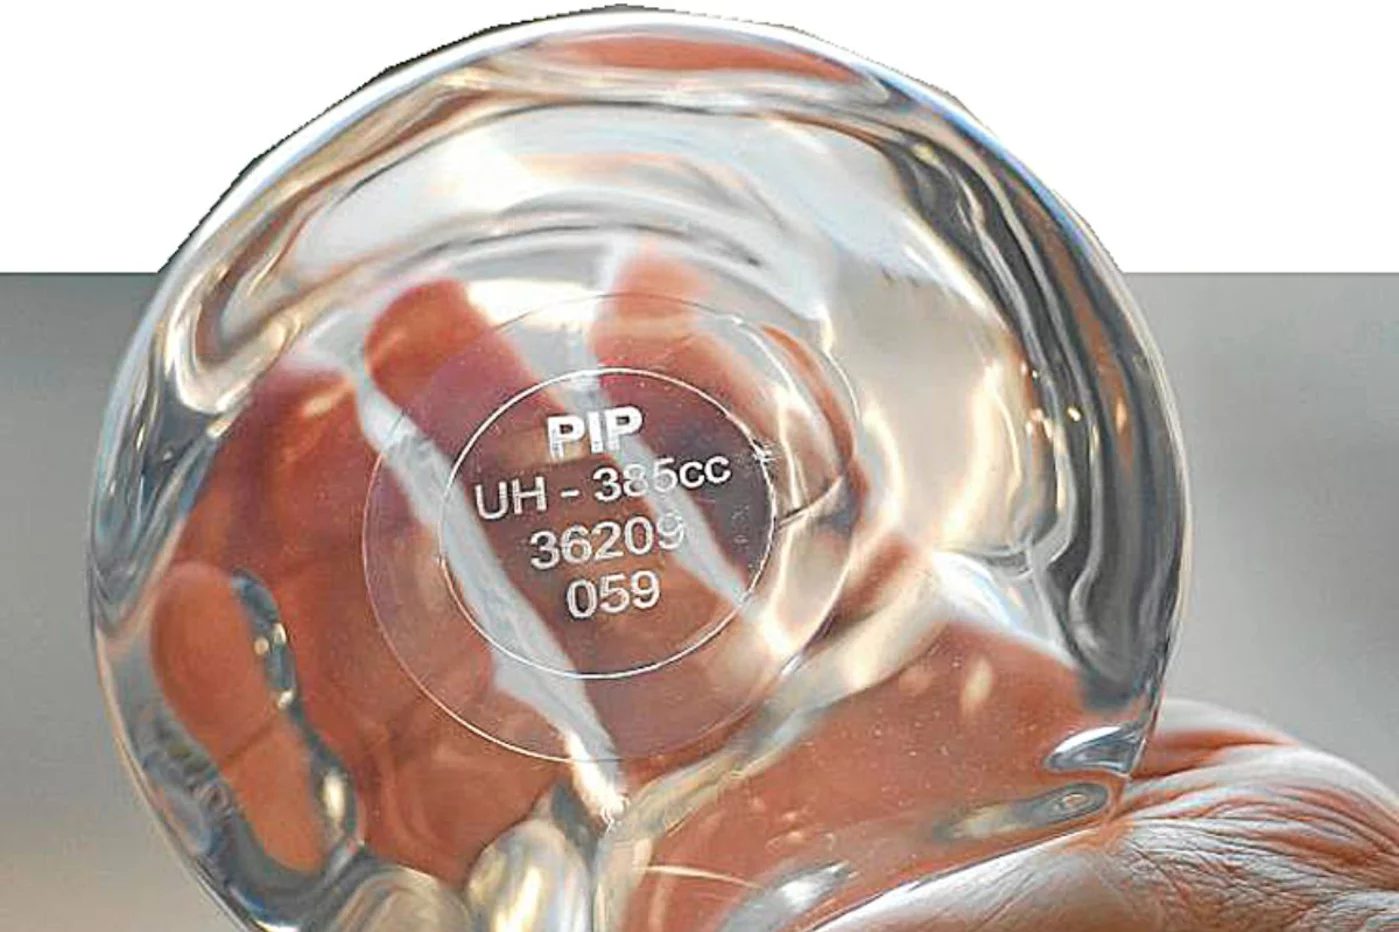 Implante de la empresa francesa Poly Implant Prothèse (PIP).